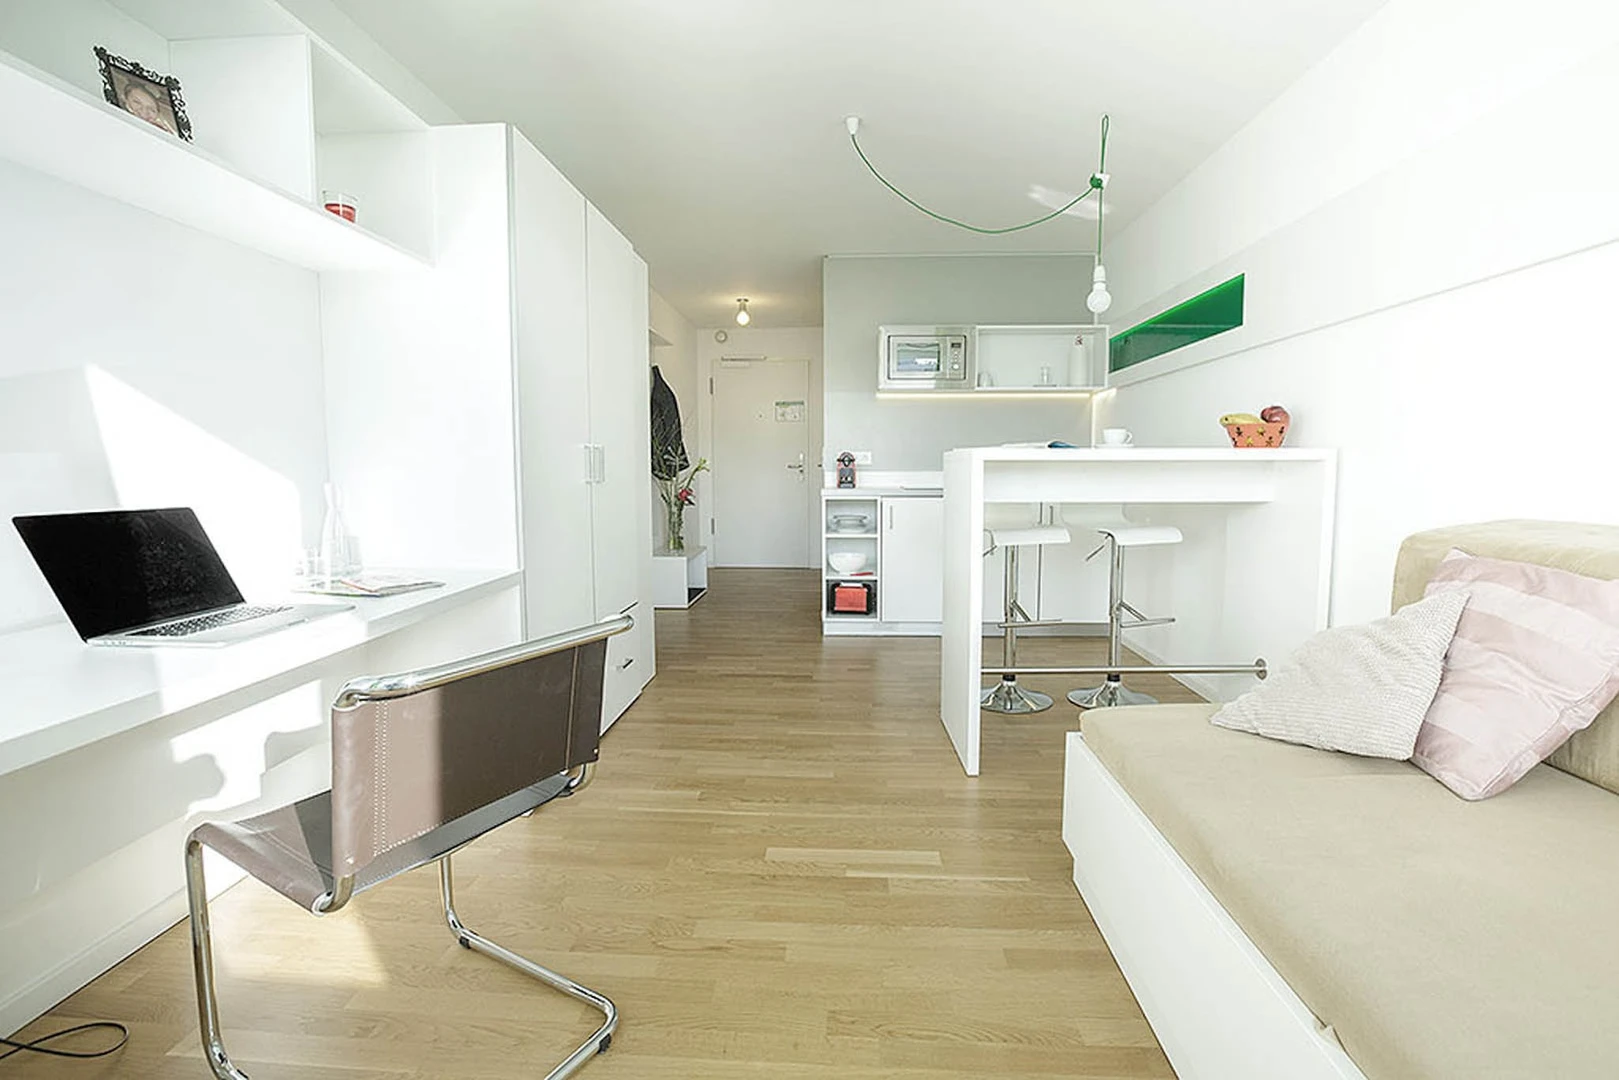 Appartement moderne et lumineux à Nuremberg